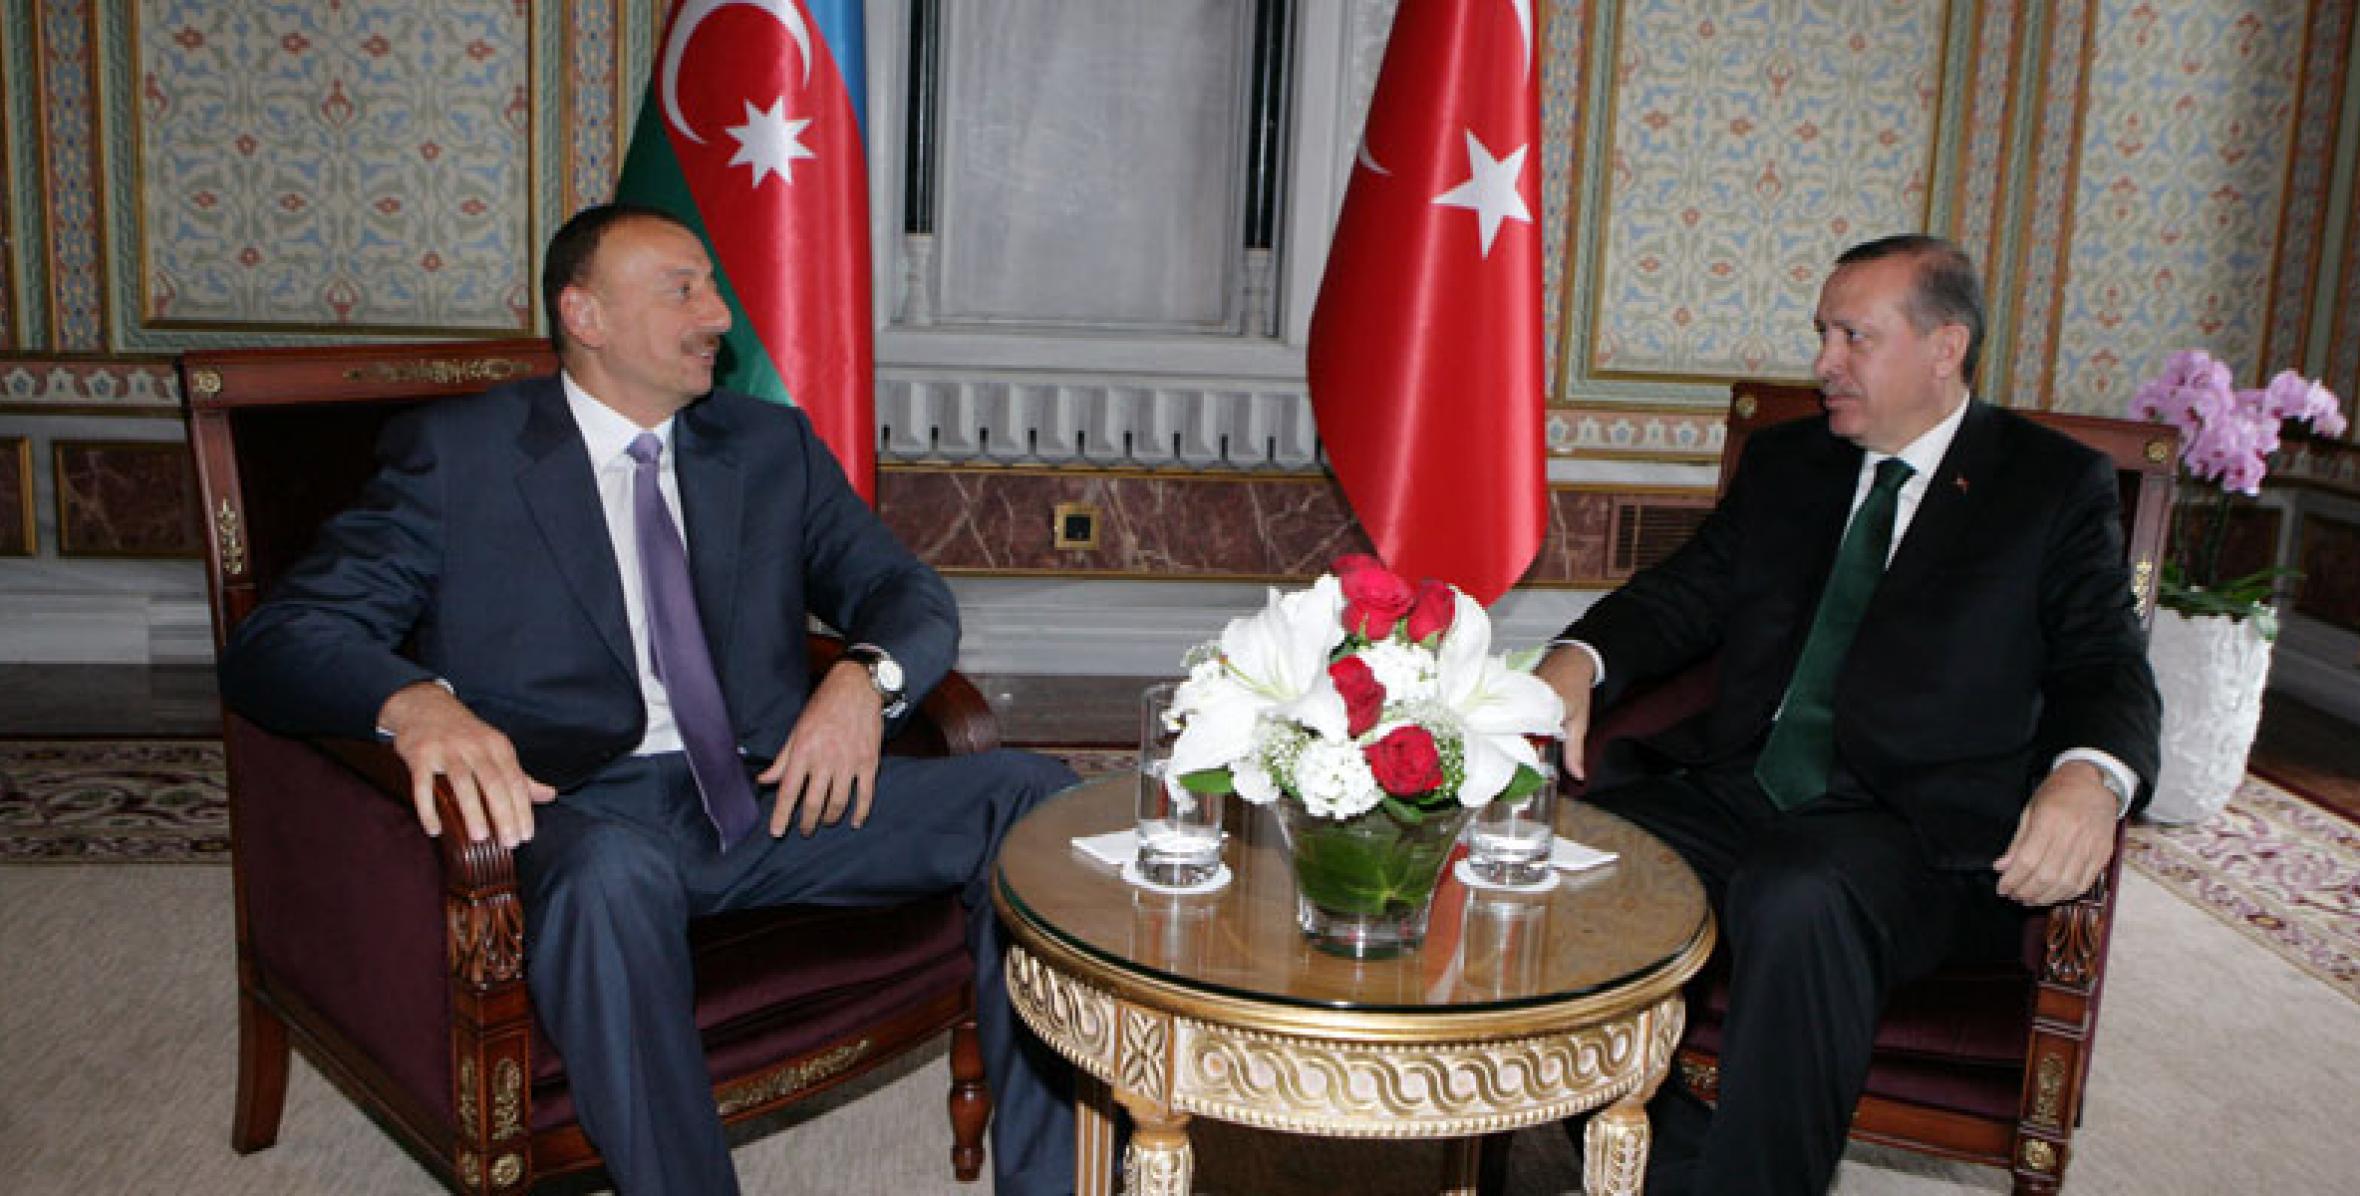 Ilham Aliyev met with Turkish Prime Minister Recep Tayyip Erdogan